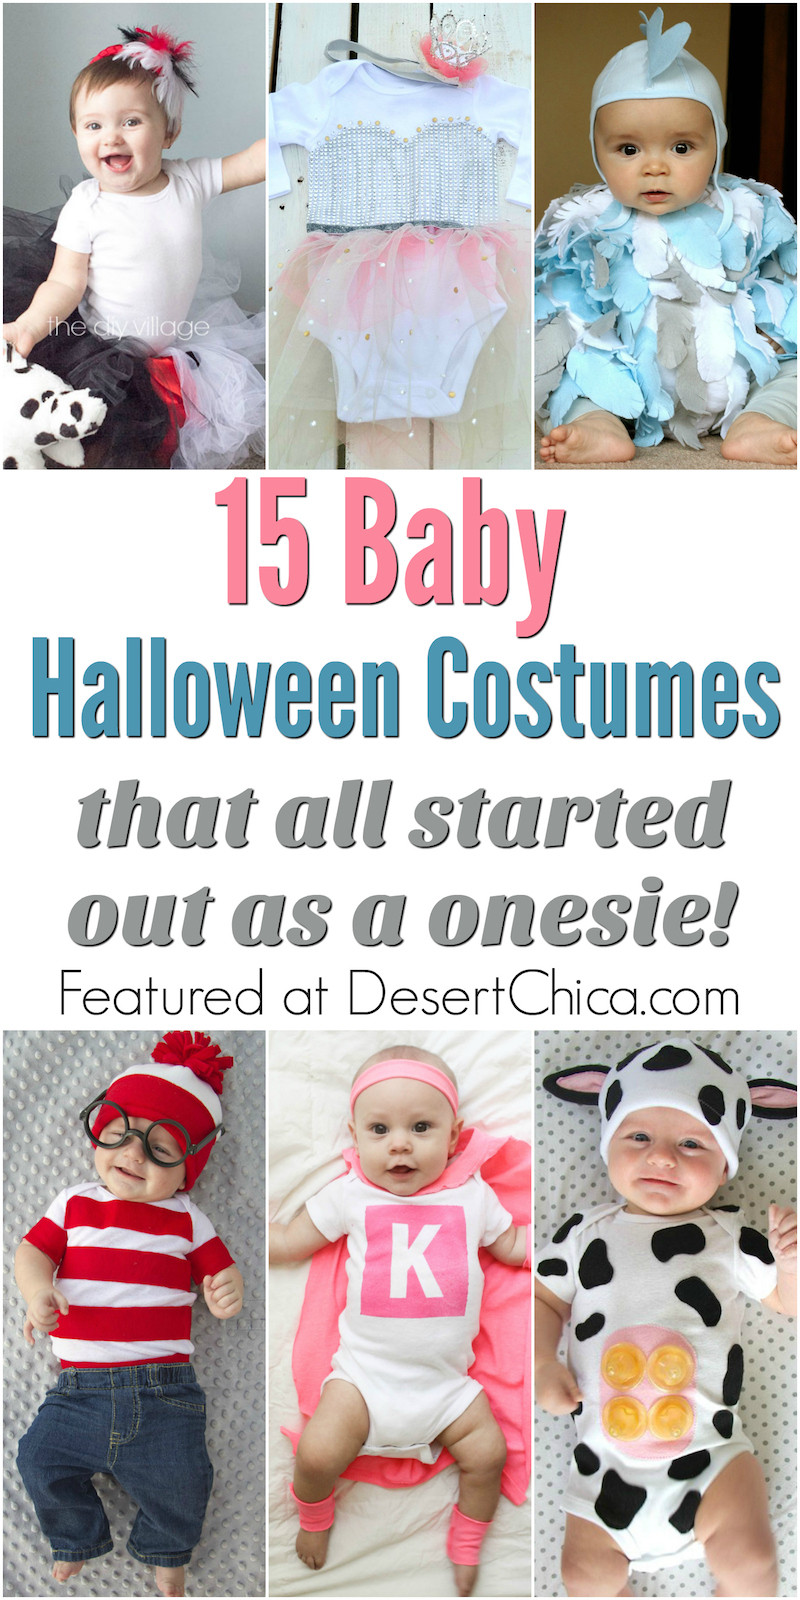 DIY Infant Costume
 15 esie Costumes for Babies